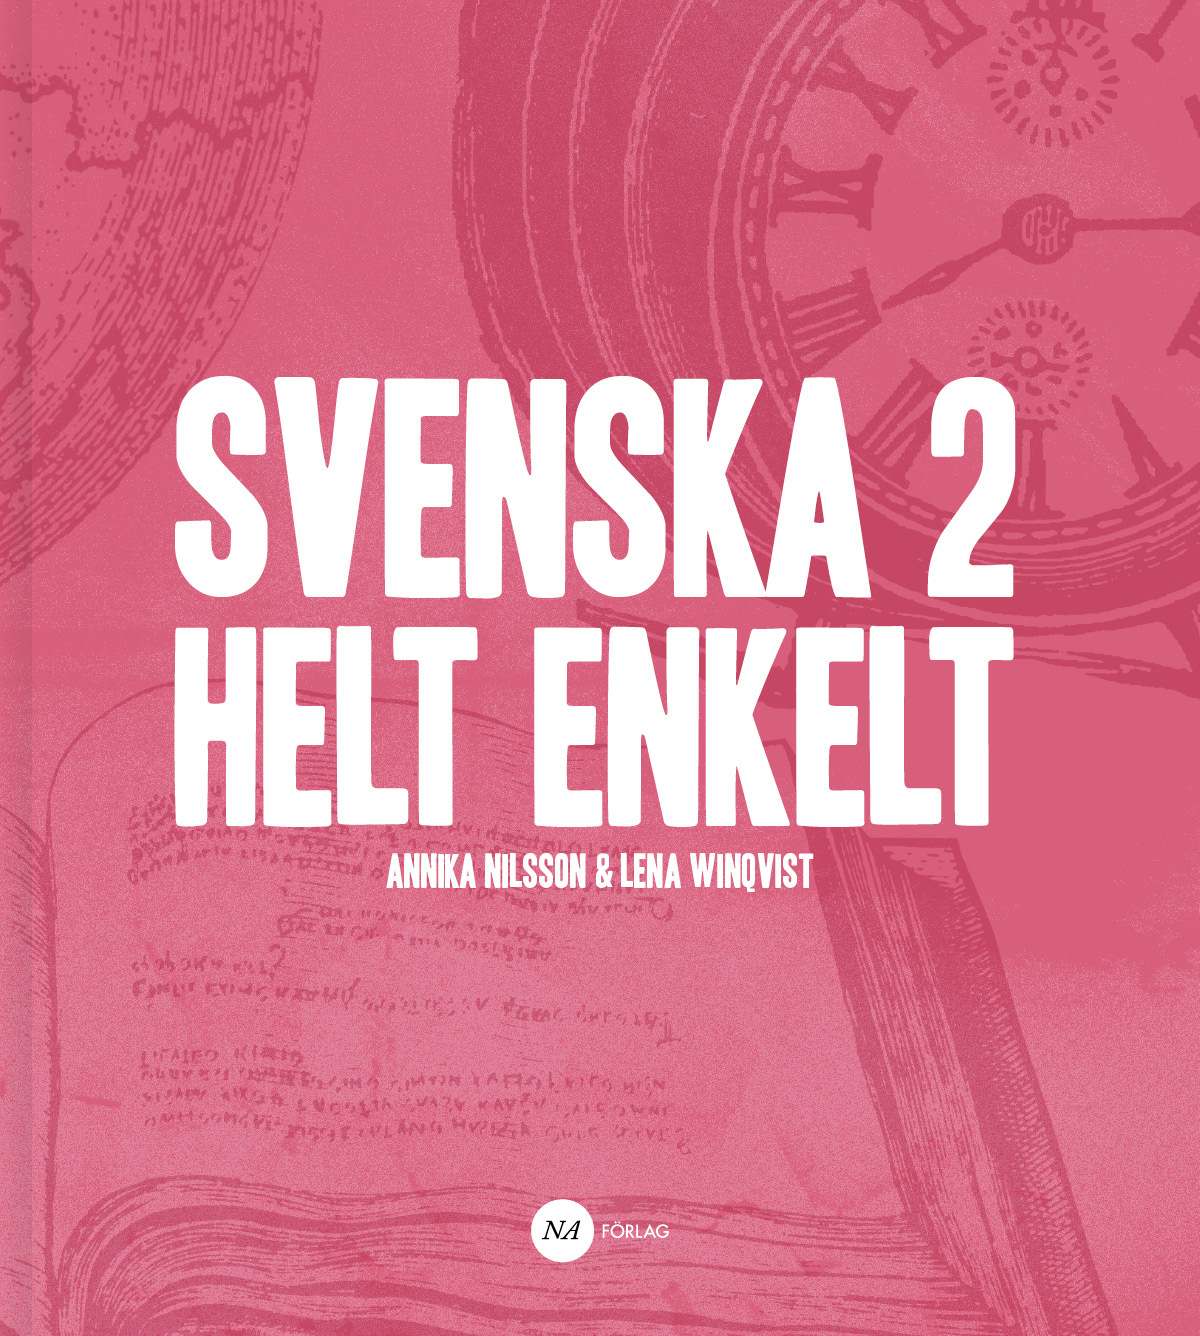 Svenska 2 - Helt enkelt.